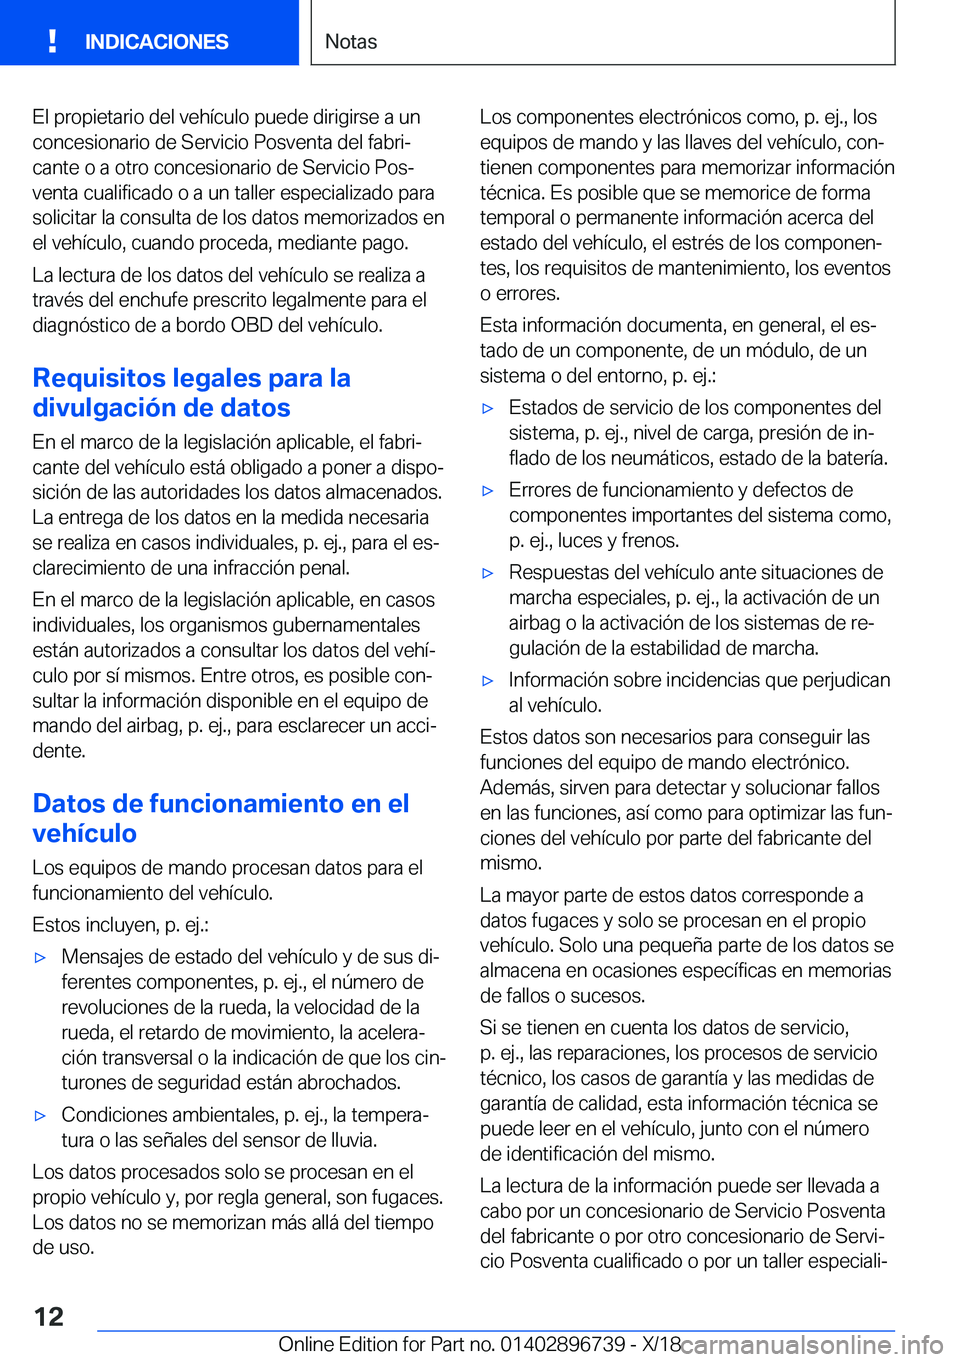 BMW X5 2019  Manuales de Empleo (in Spanish) �E�l��p�r�o�p�i�e�t�a�r�i�o��d�e�l��v�e�h�